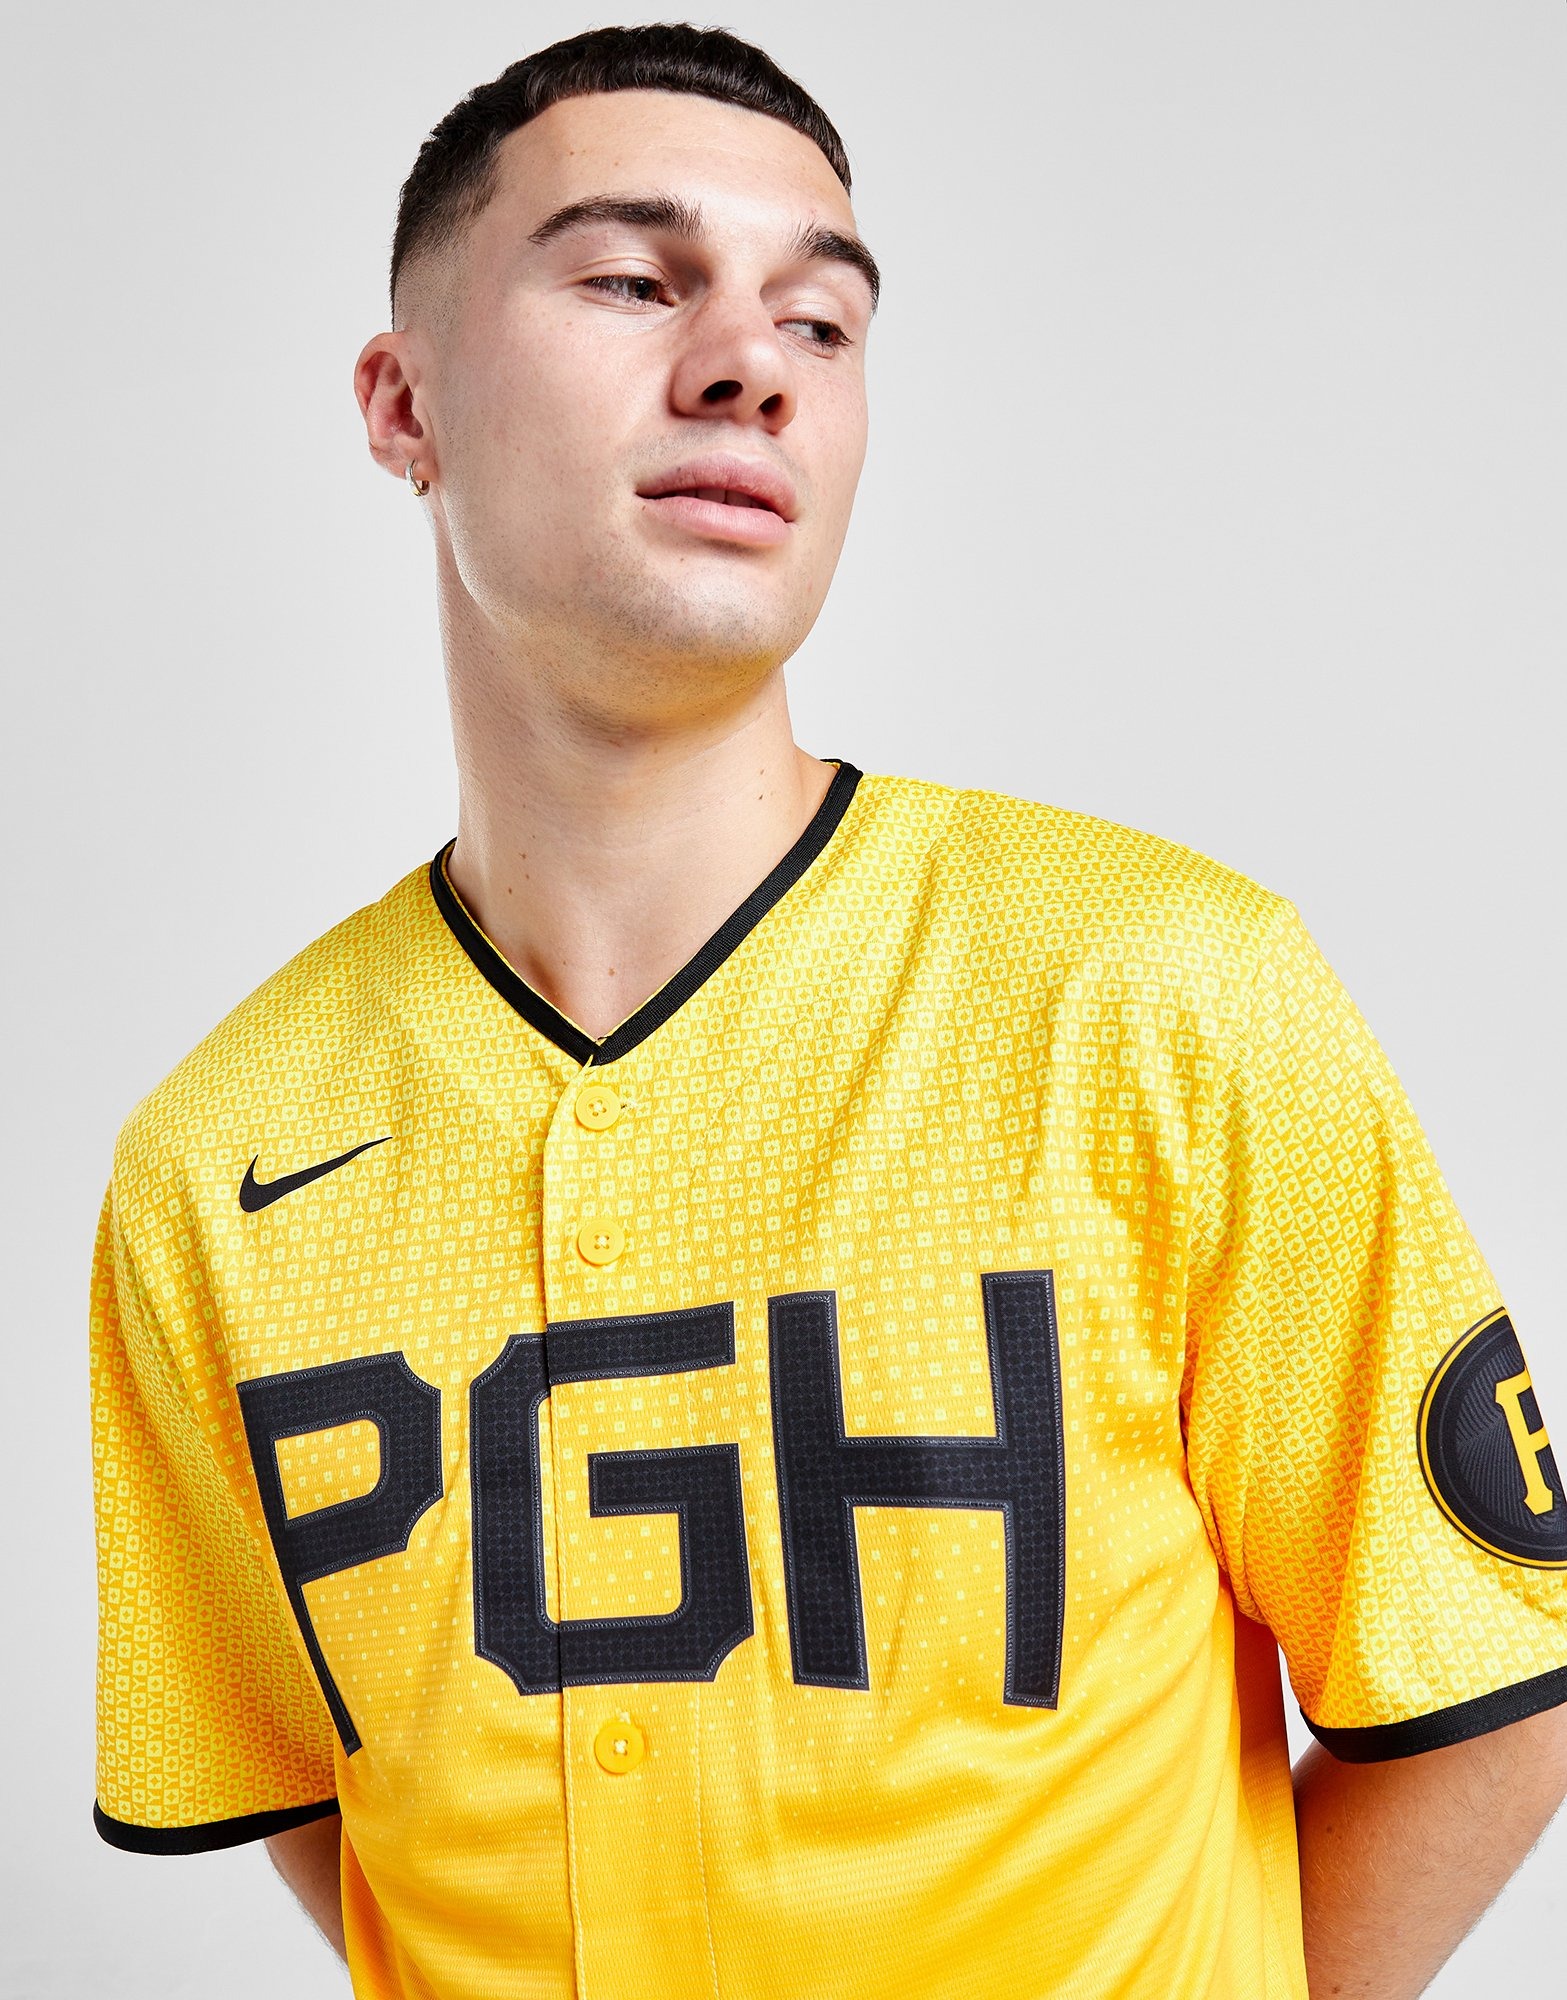 Large Nike Pittsburgh Pirates Polo Shirt MLB